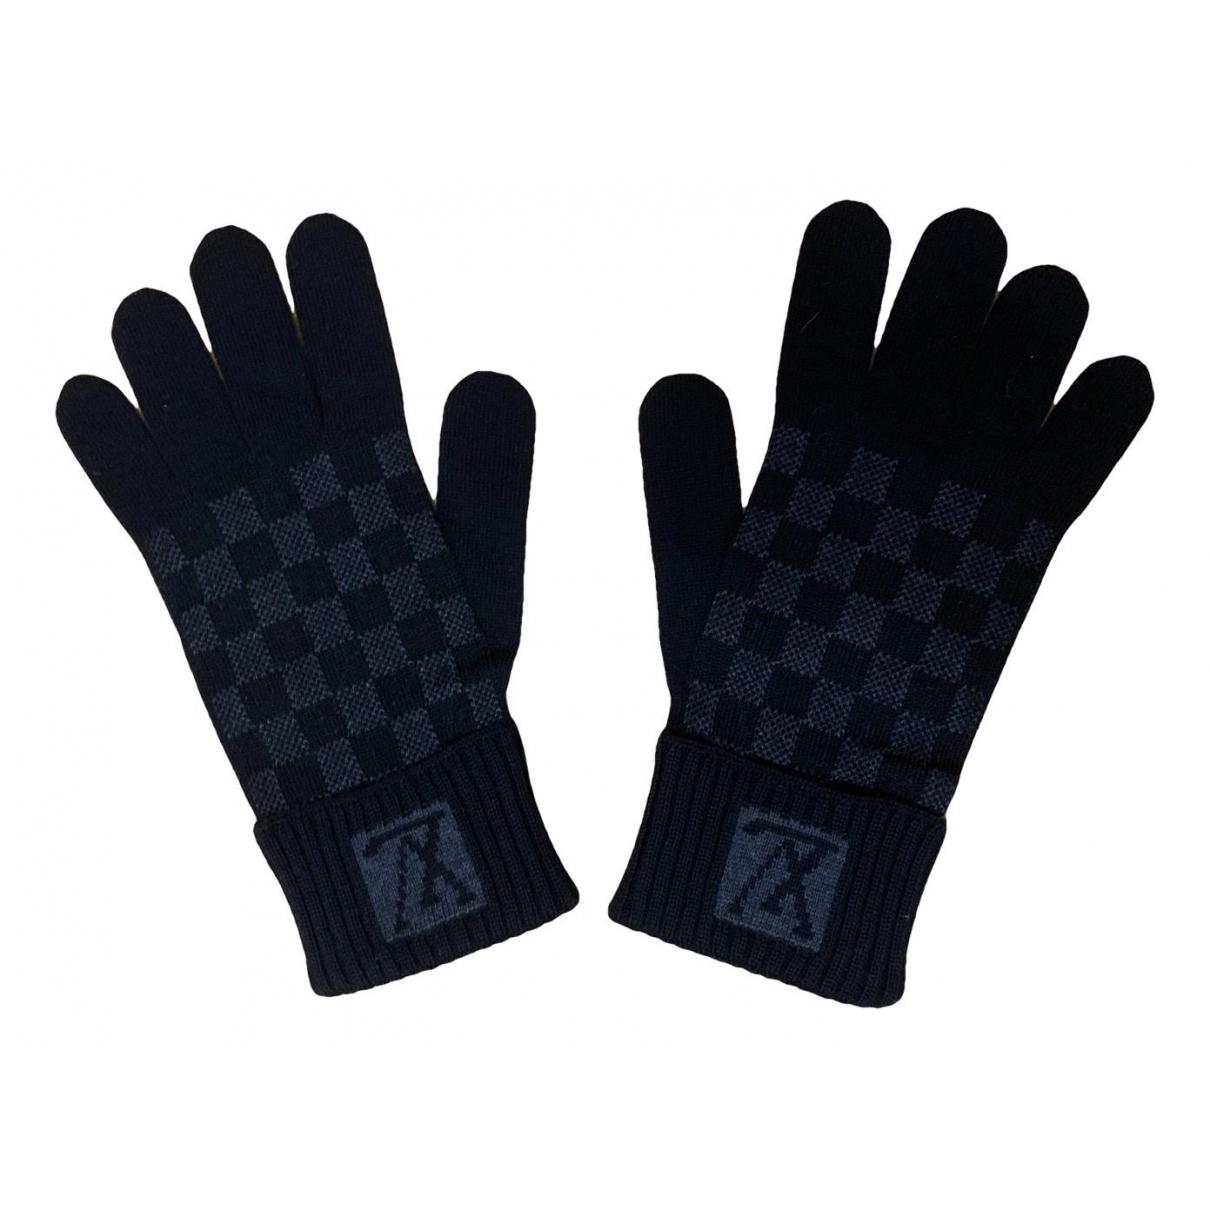 Louis Vuitton Monogram Shearling Gloves, Brown, 9